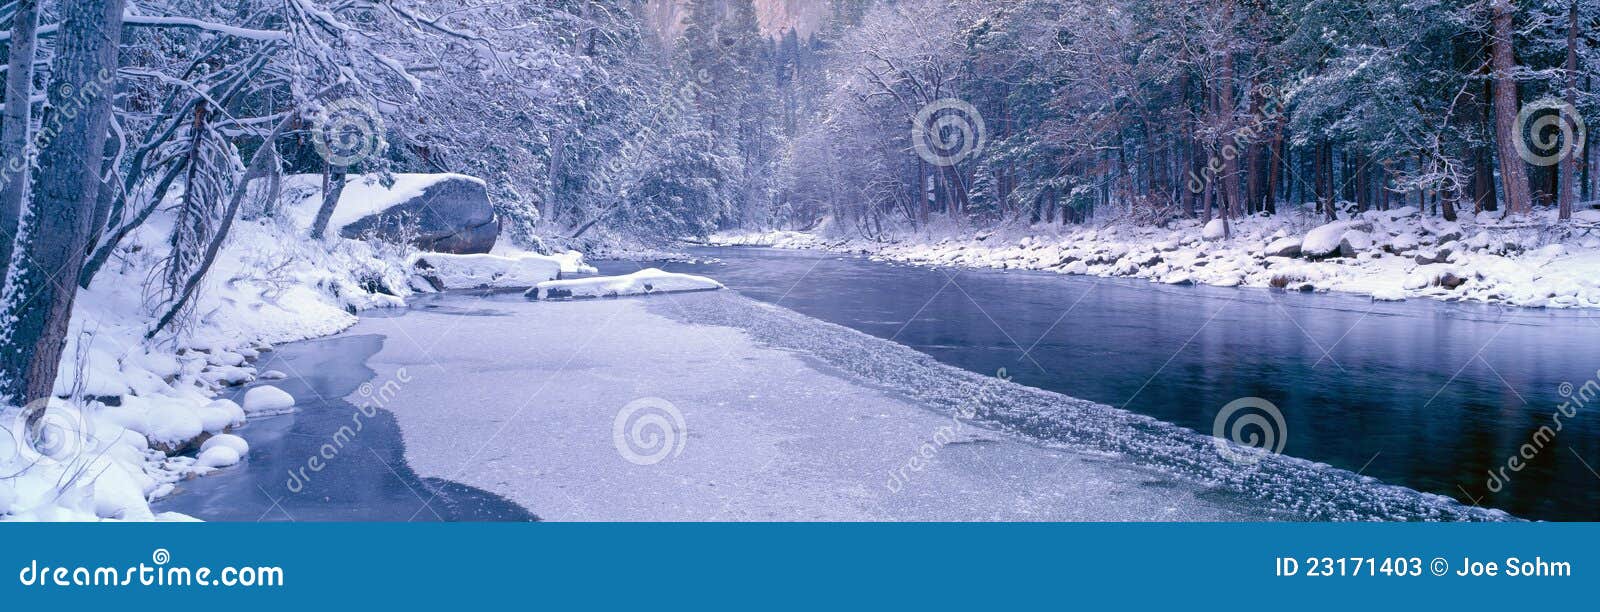 snowy merced river in yosemite